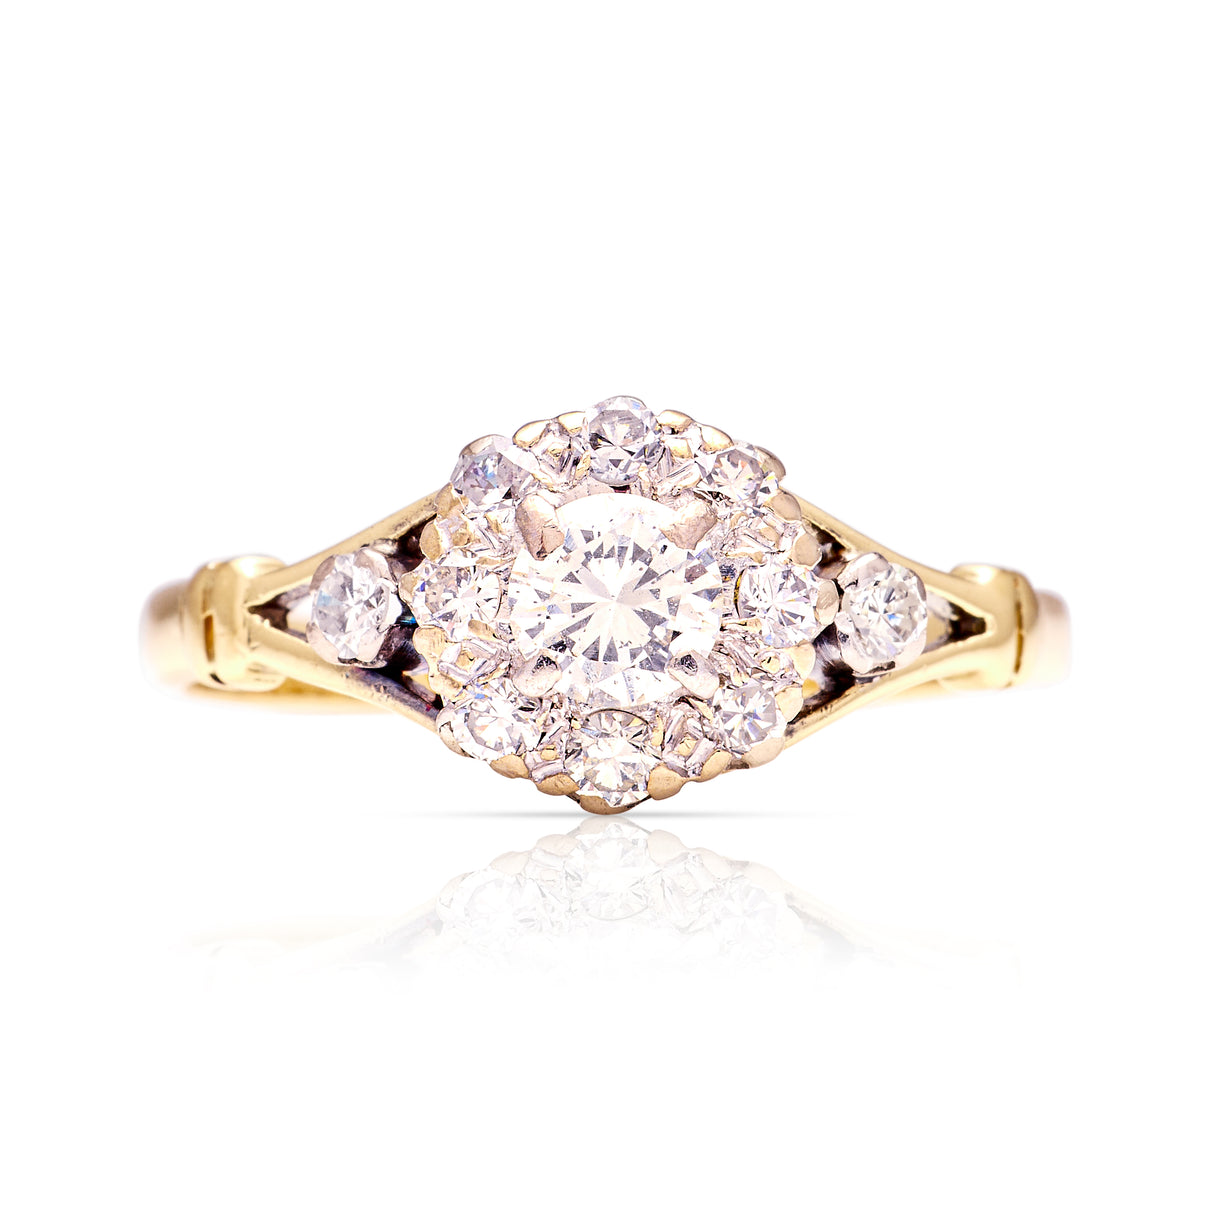 Antique, Edwardian diamond cluster ring, 18ct yellow gold & platinum